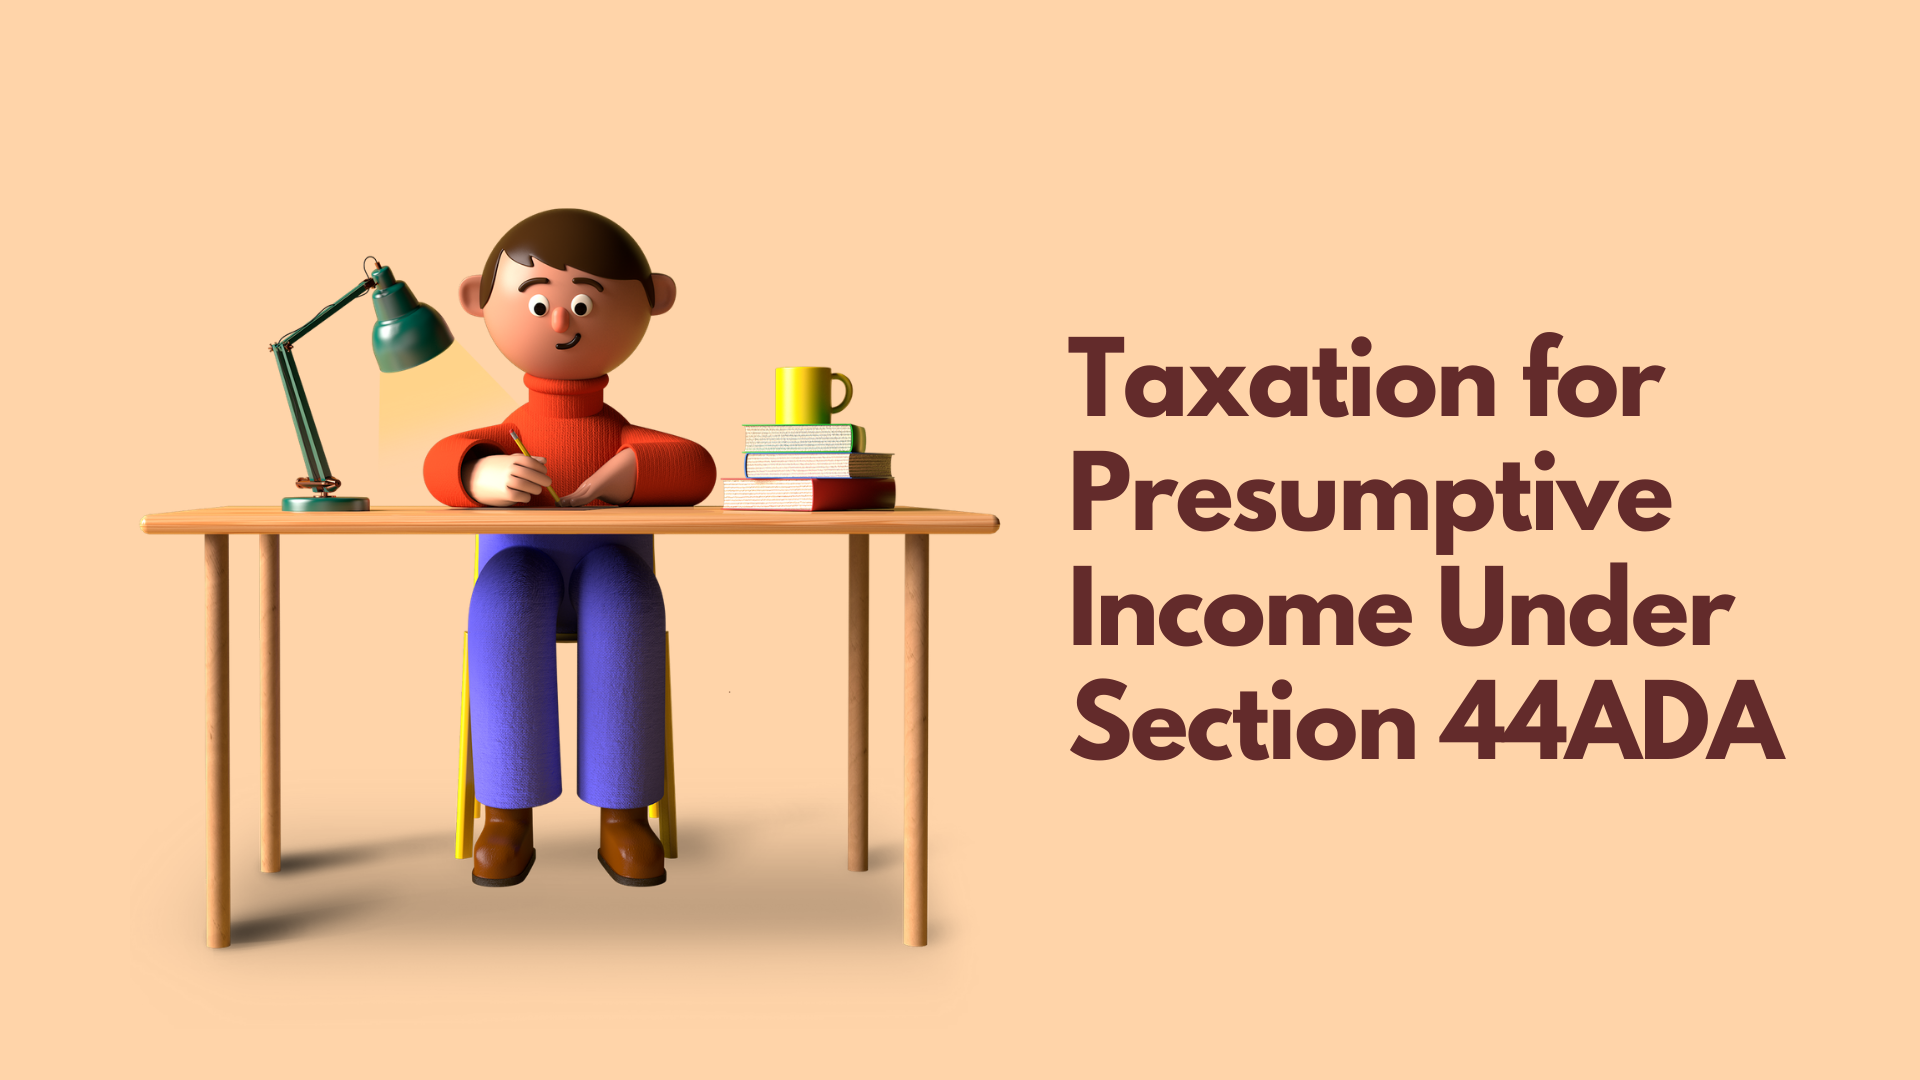 Taxation for Presumptive Income for professionals 44ADA